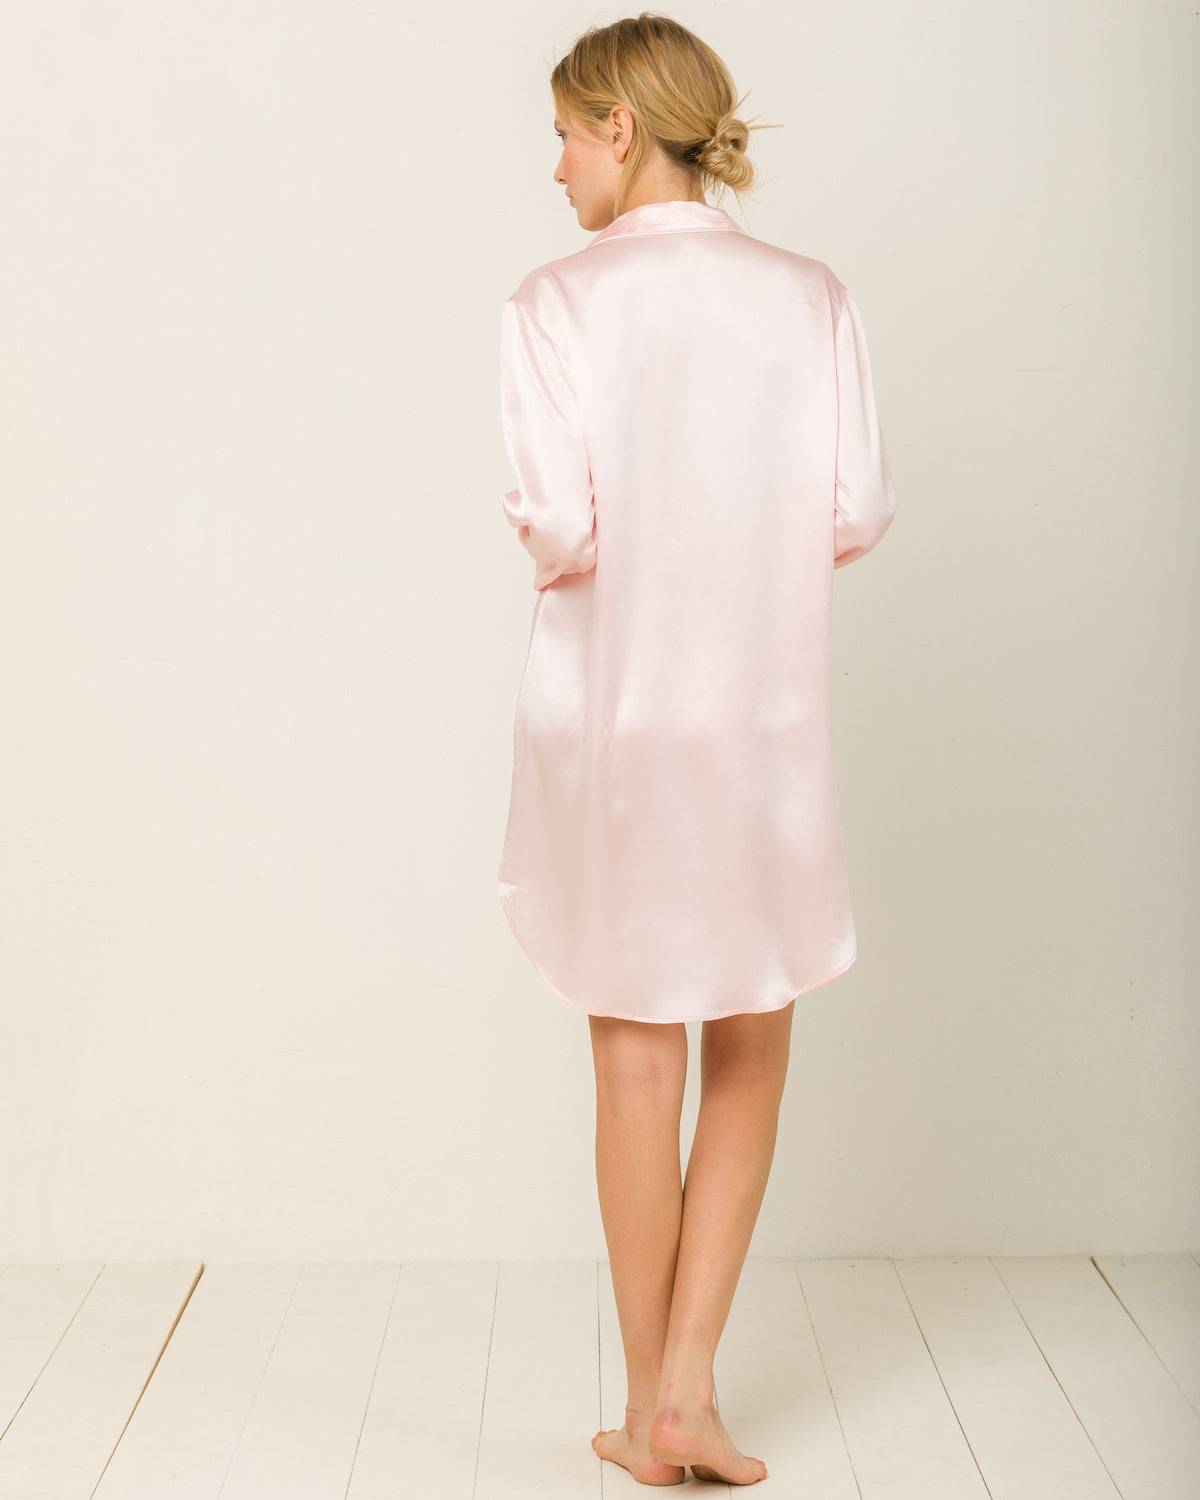 Camilla in Candy Rosé - Nightshirt Loungewear, Pyjama, Seidenpyjama, Schlafanzug | RADICE